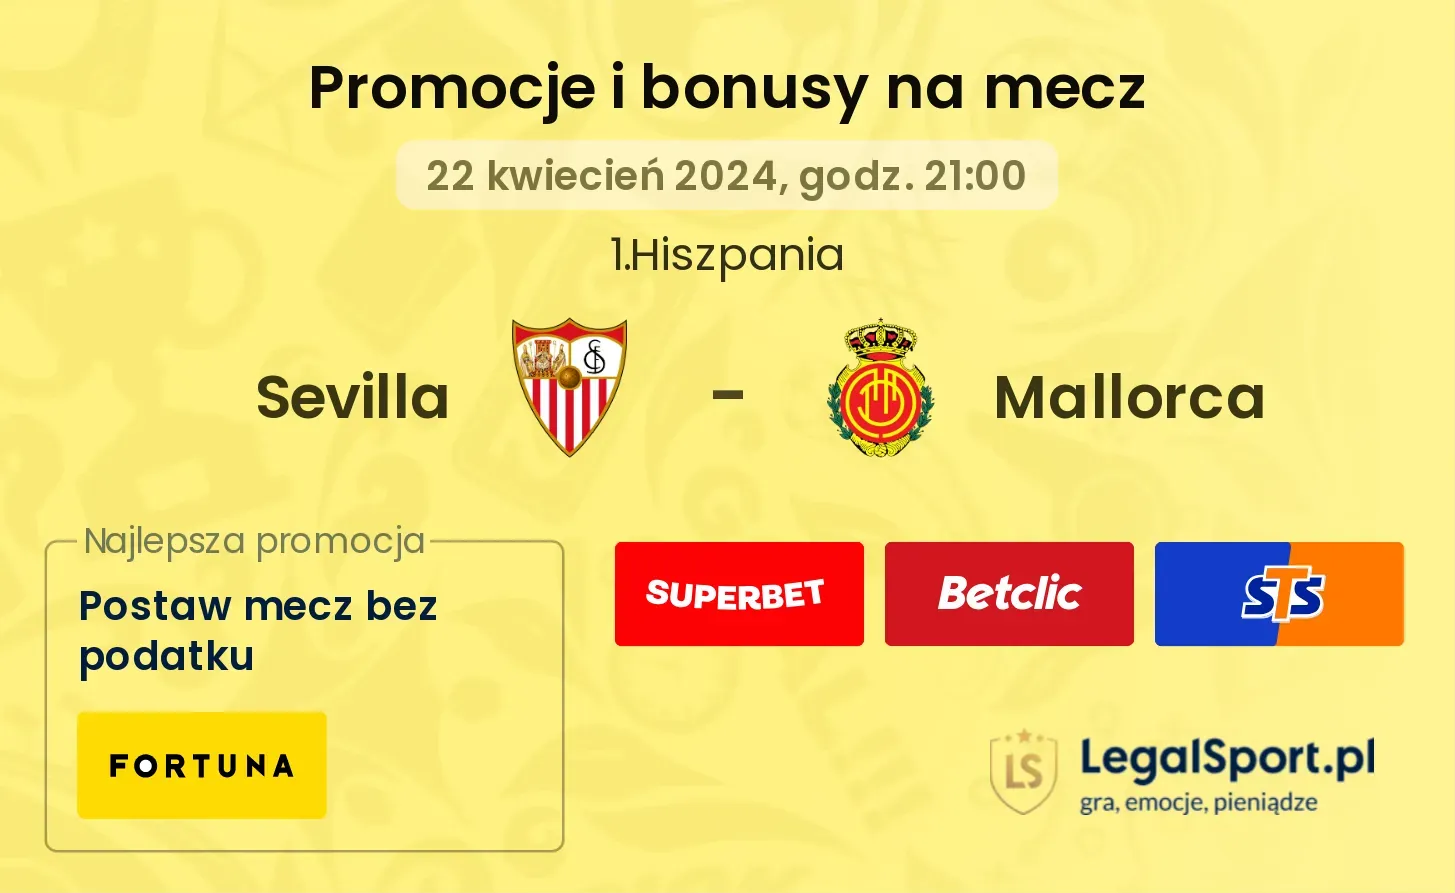 Sevilla - Mallorca promocje bonusy na mecz